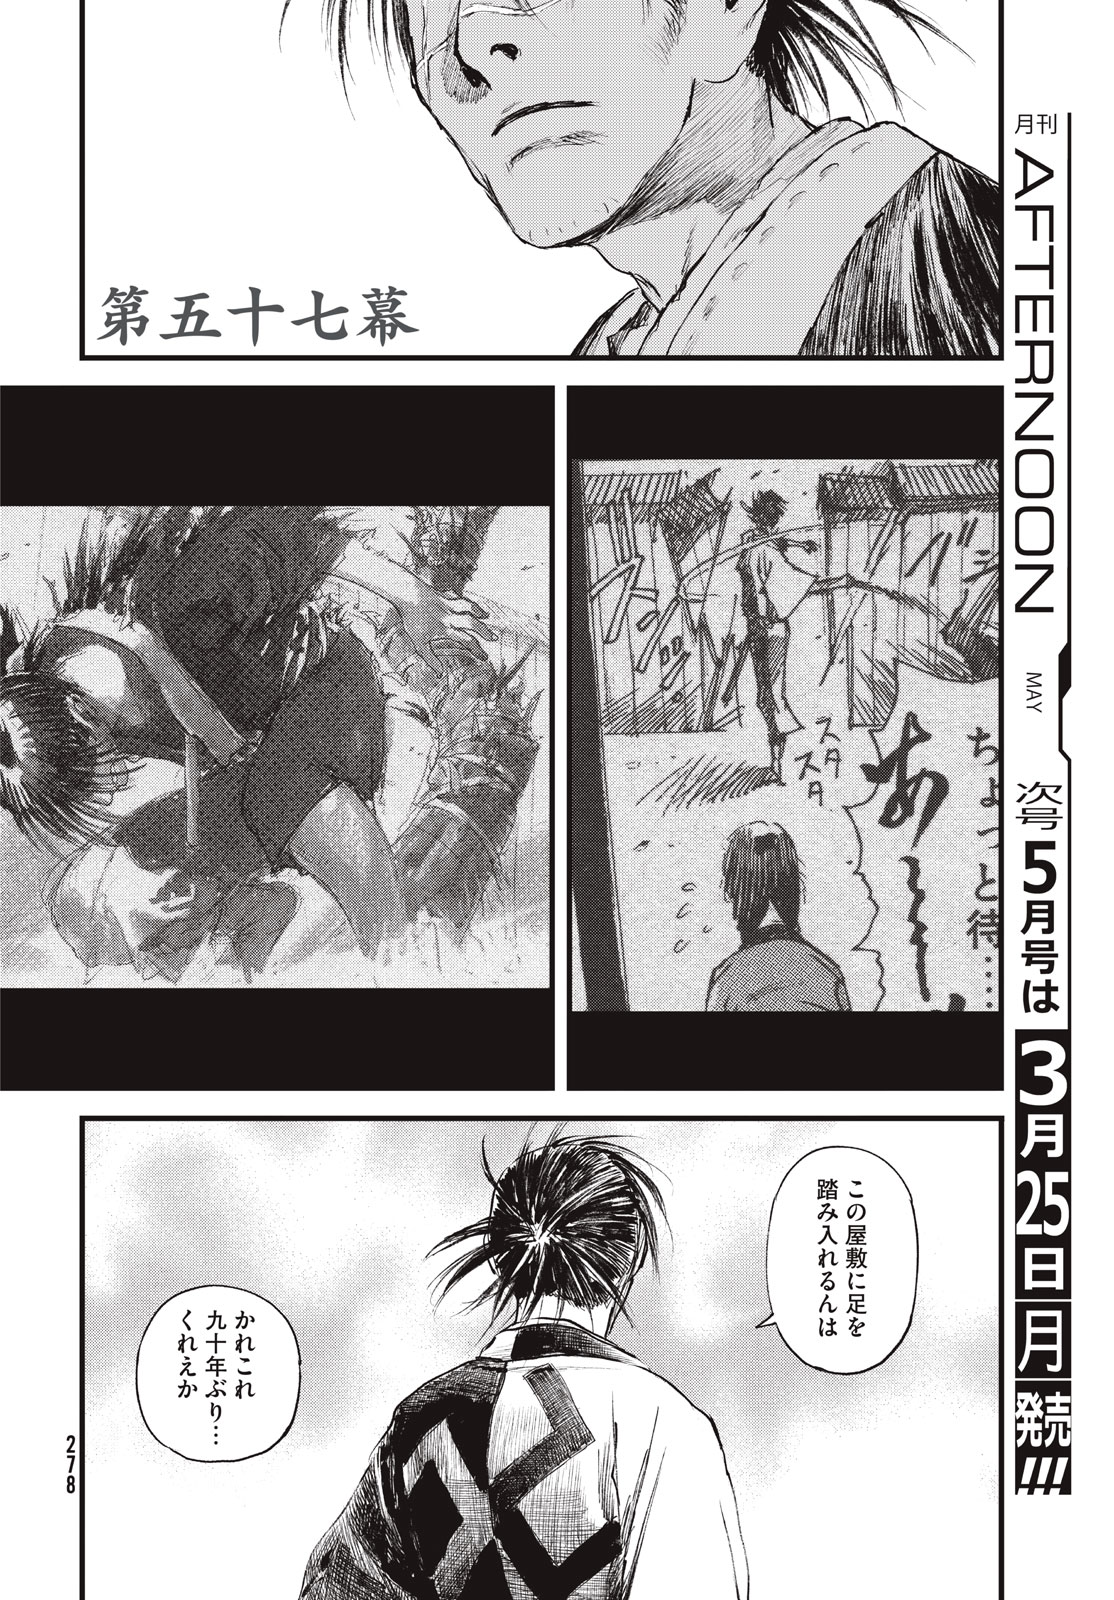 Blade of the Immortal: Bakumatsu Arc - Chapter 57 - Page 6